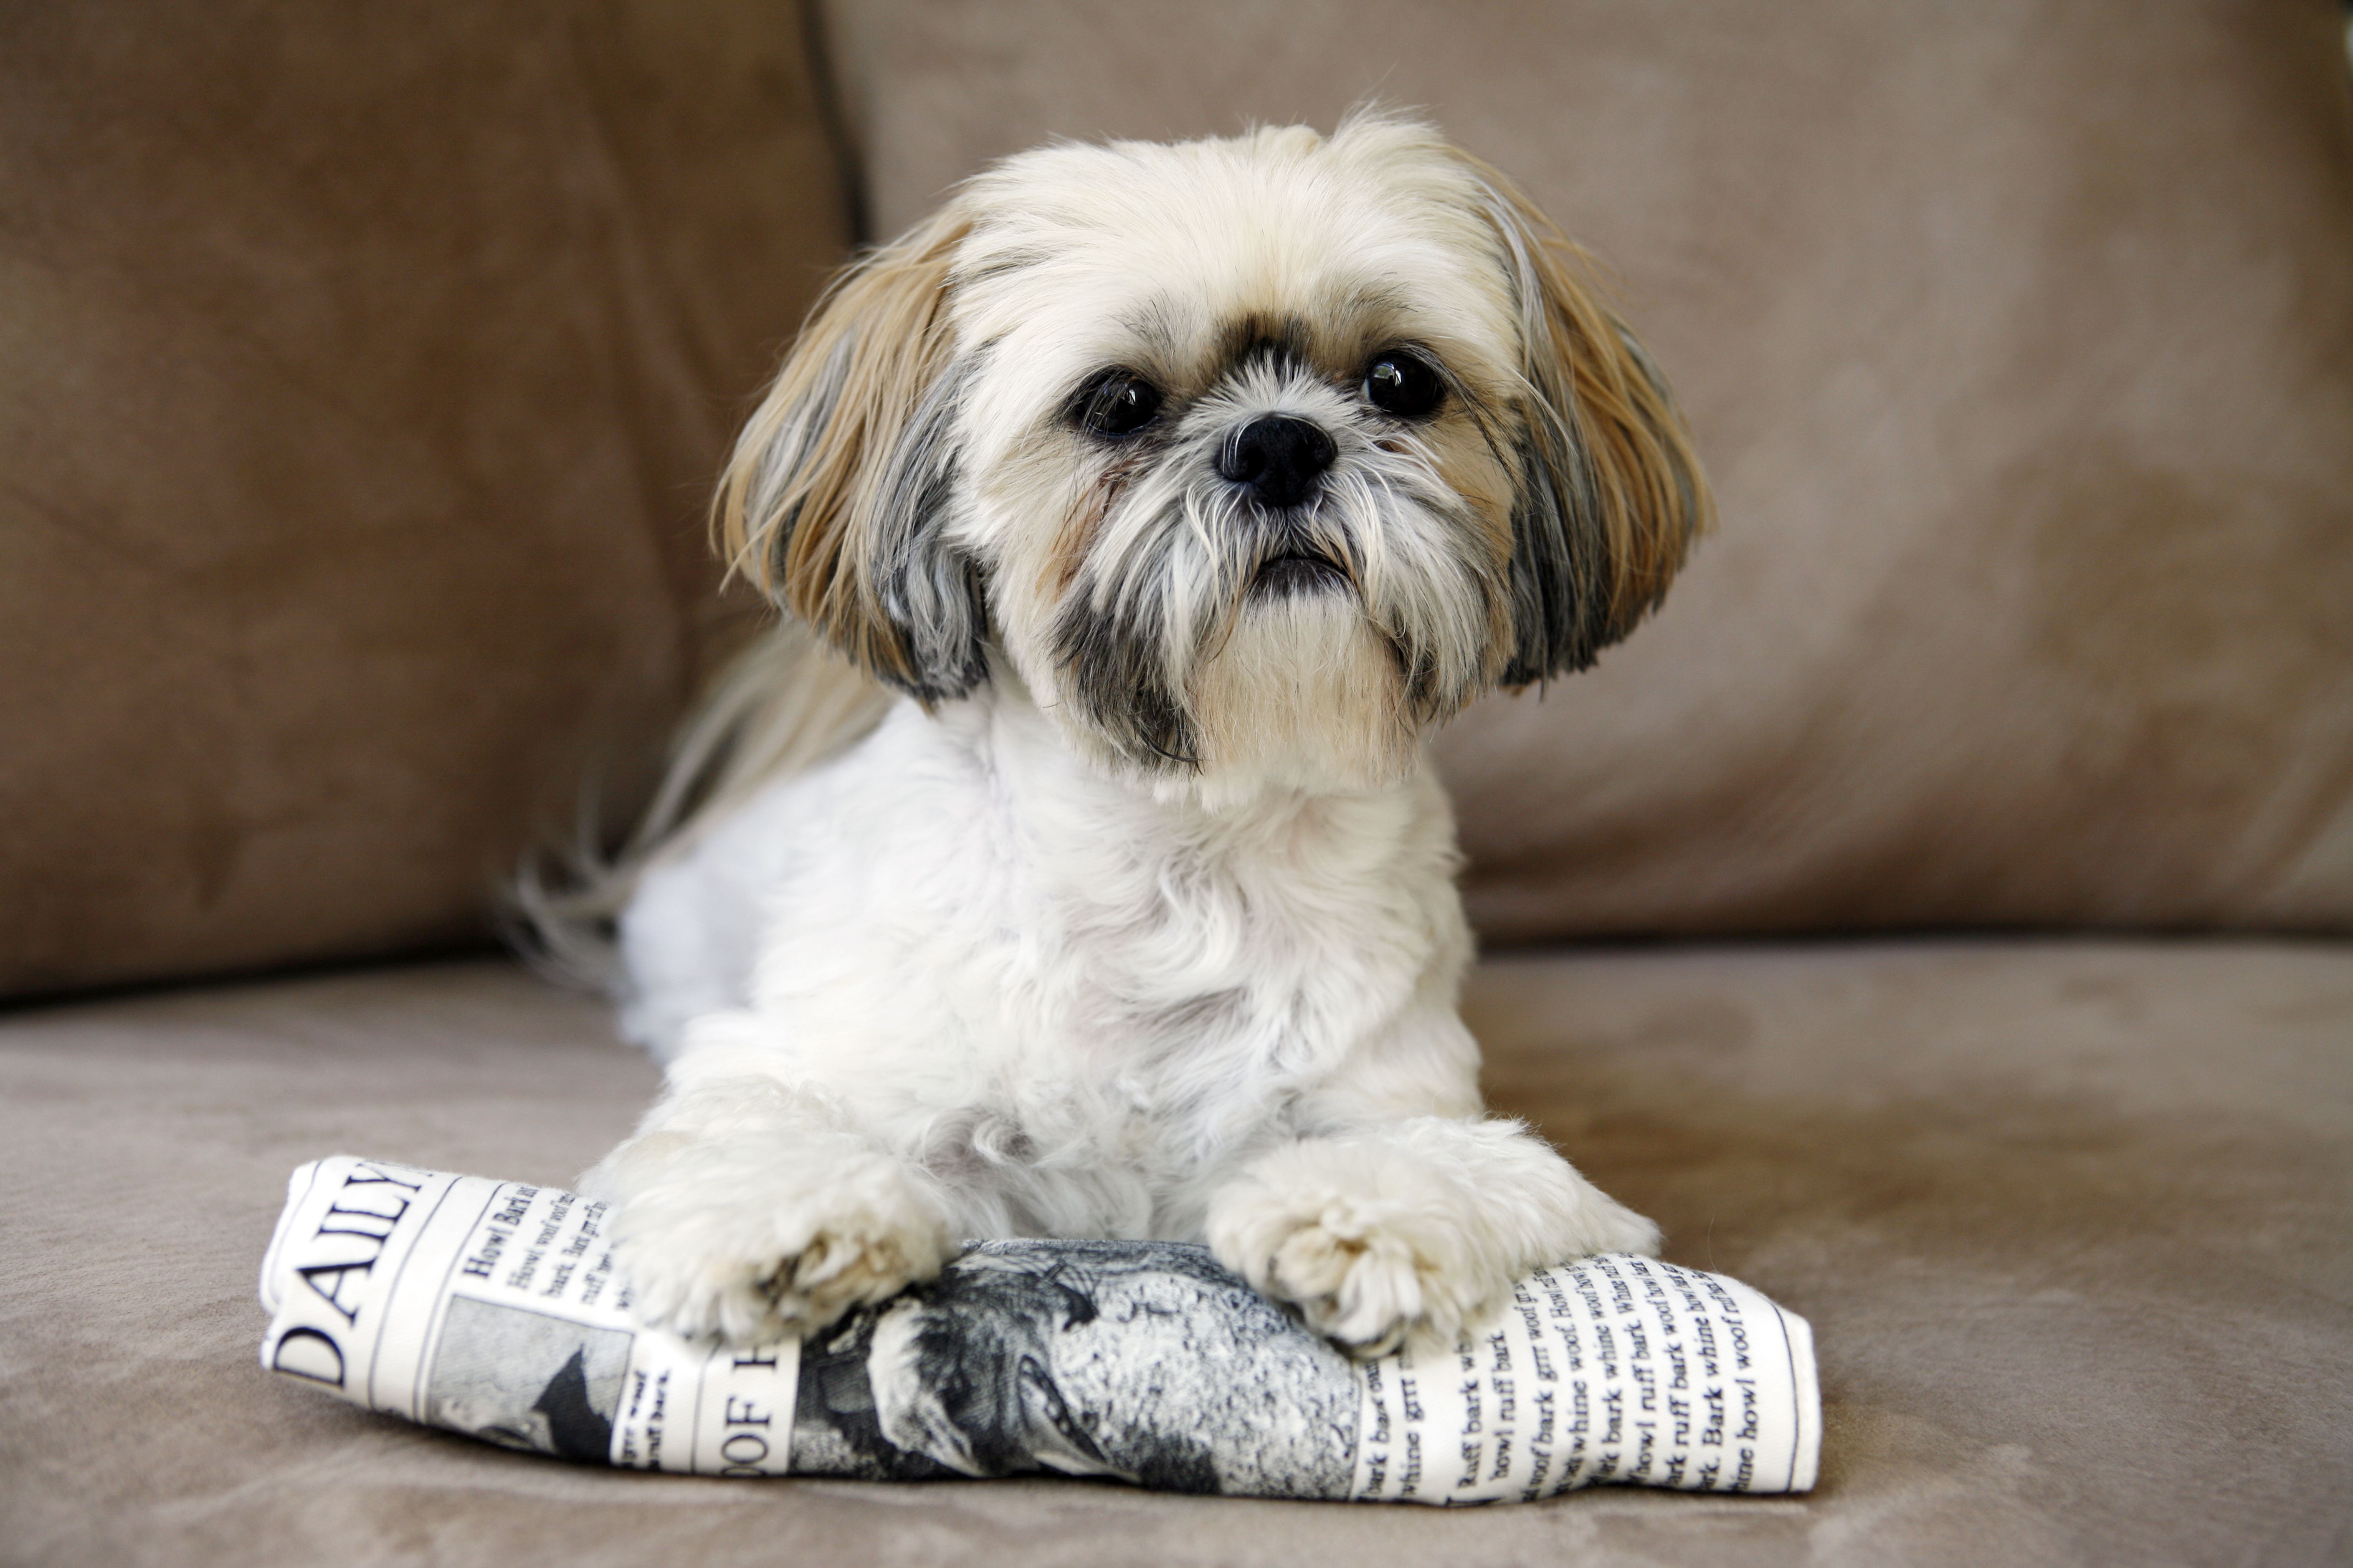 Shih tzu dog lying on a newspaper